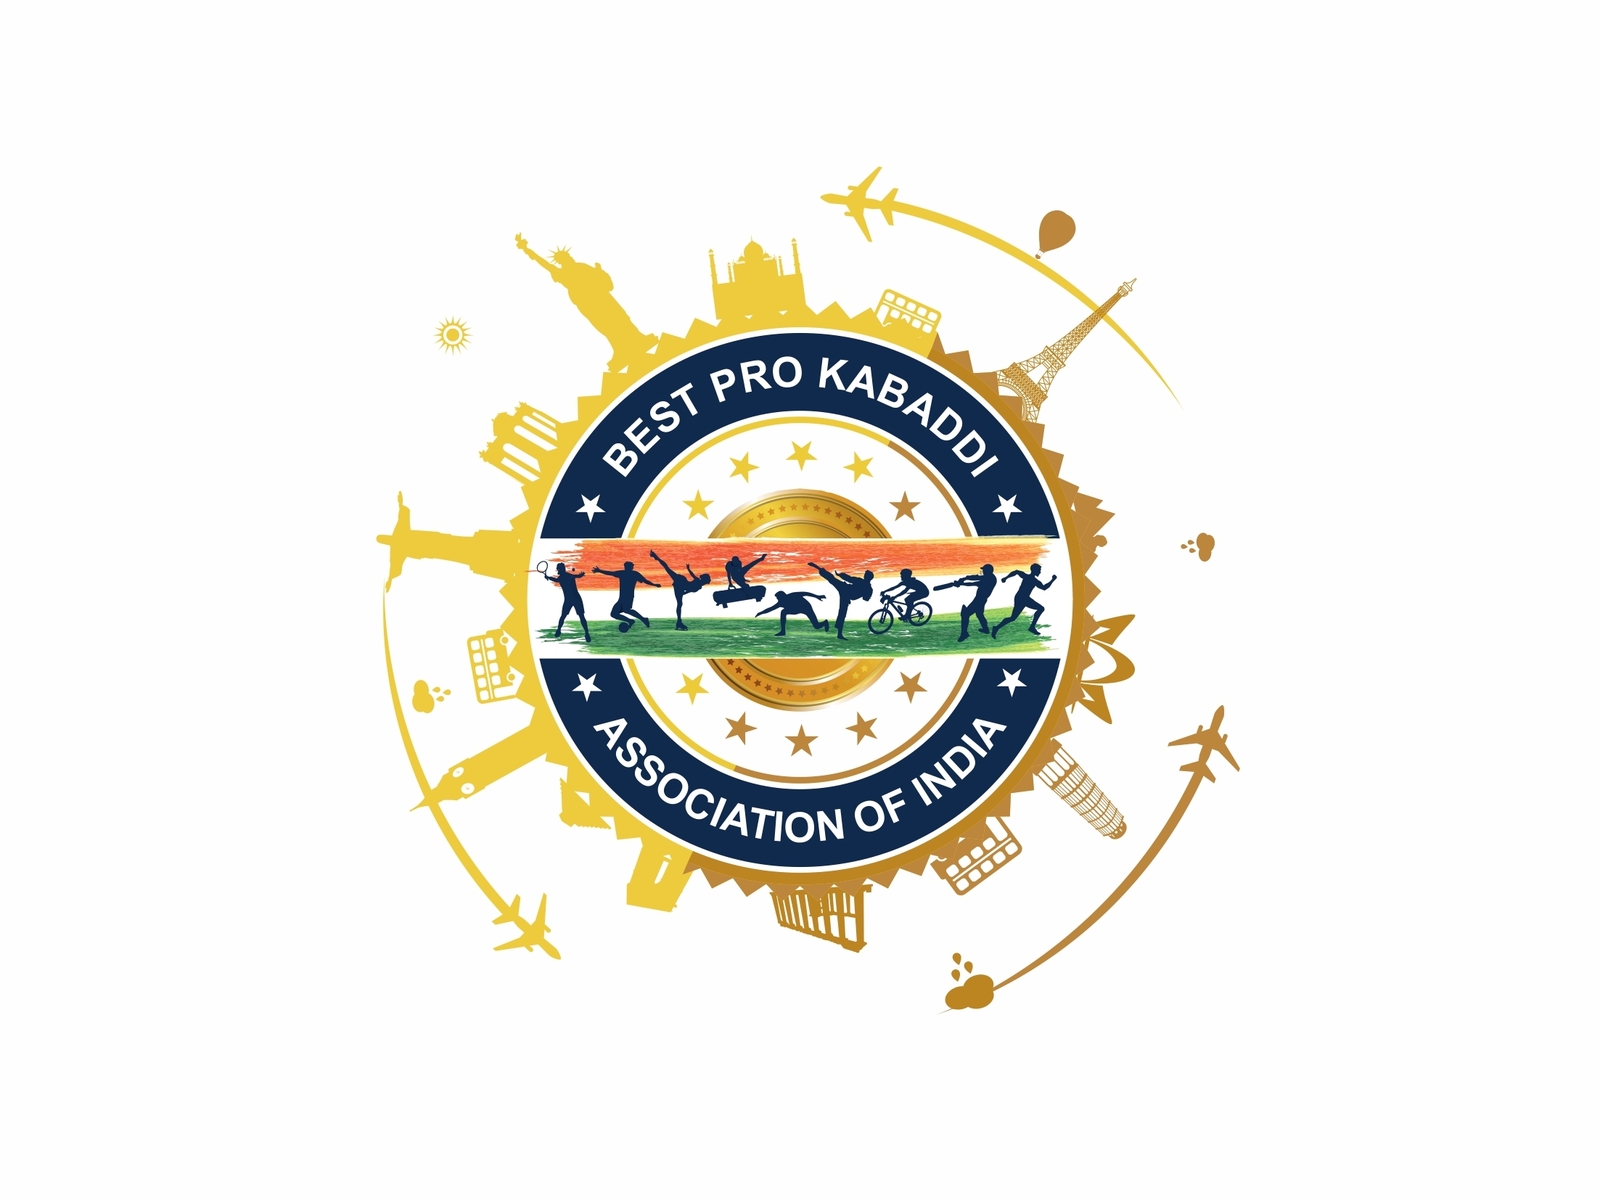 Best Pro Kabaddi Association of India Logo by Creativityyzone on Dribbble